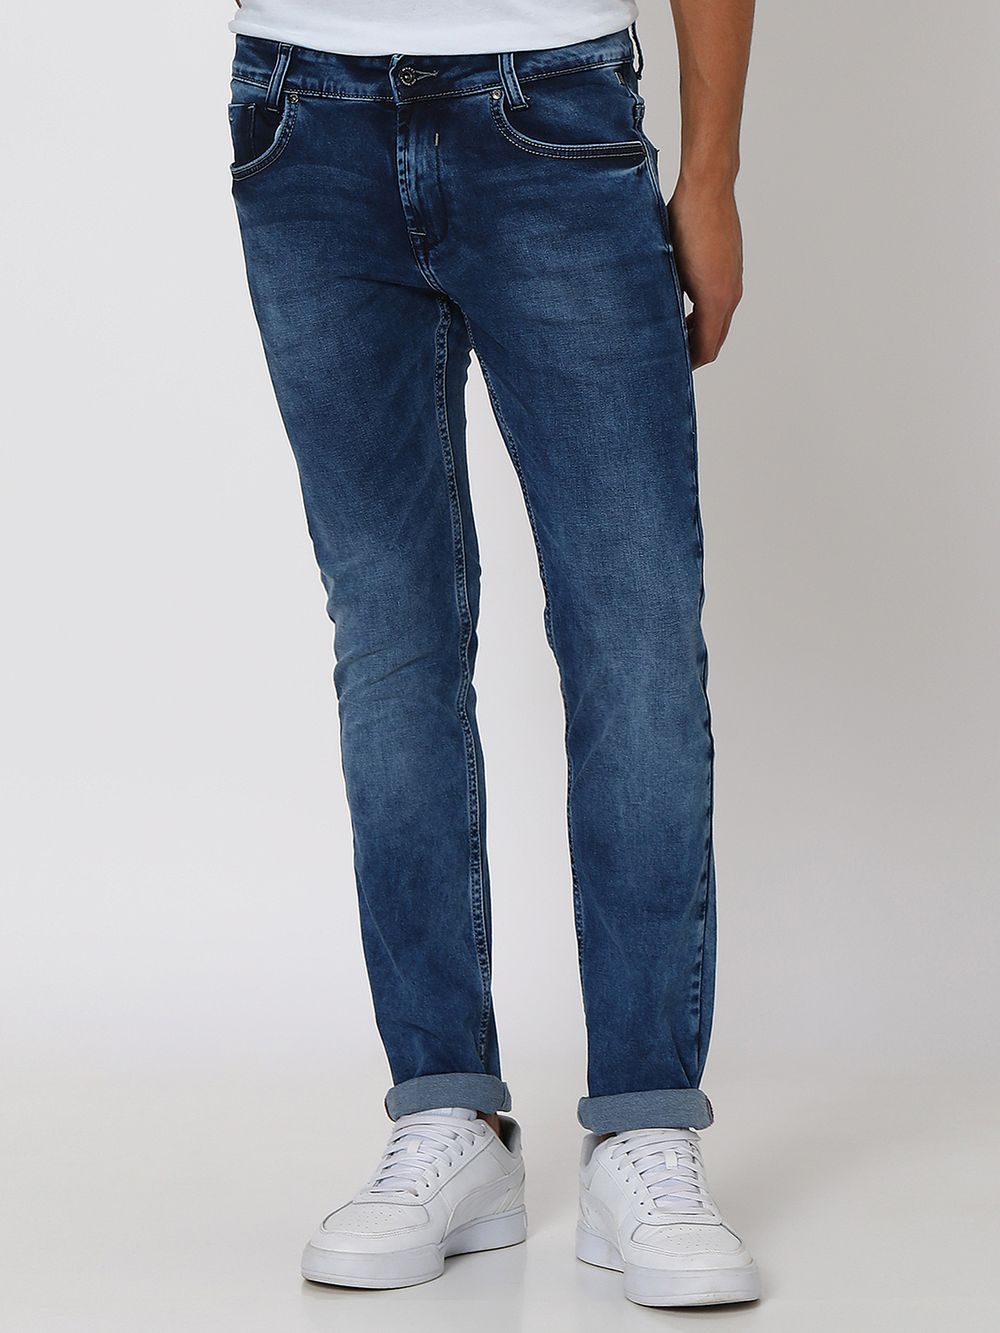 Mid Blue Super Slim Fit Originals Stretch Jeans